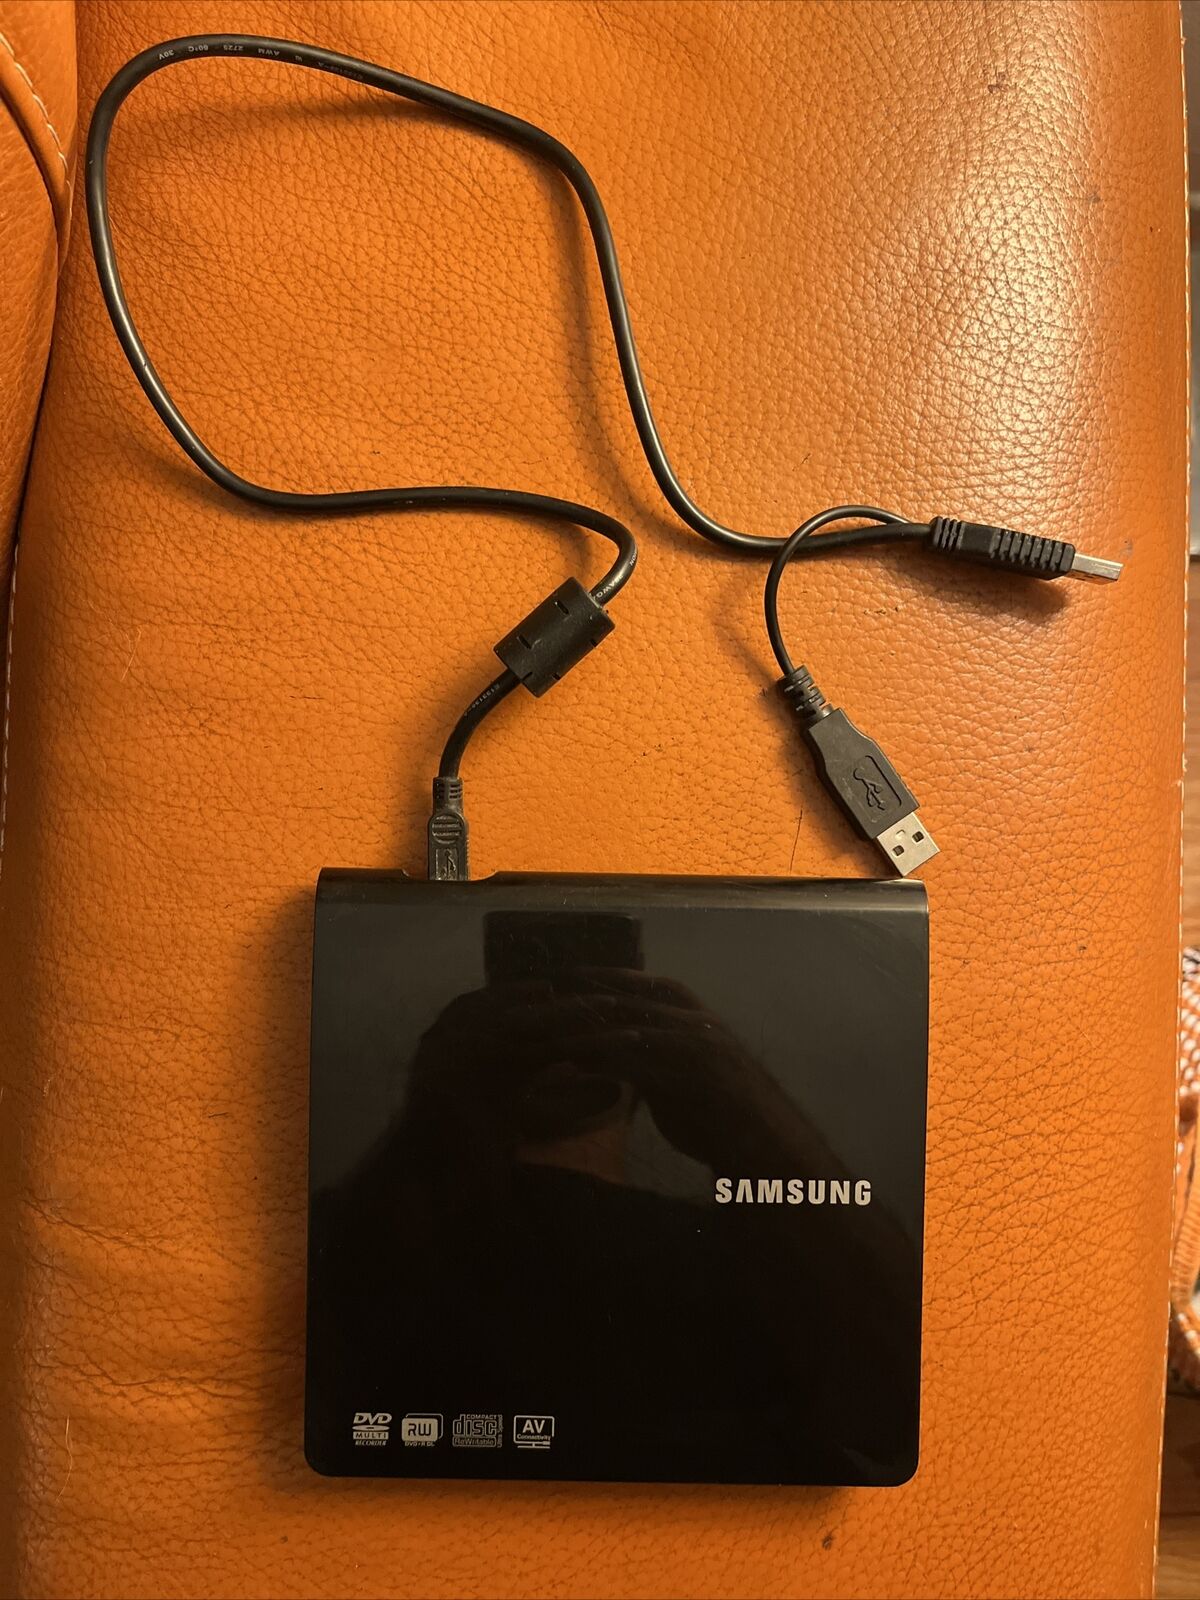 Samsung External Portable Slim USB DVD-RW Writer SE-208 Burner